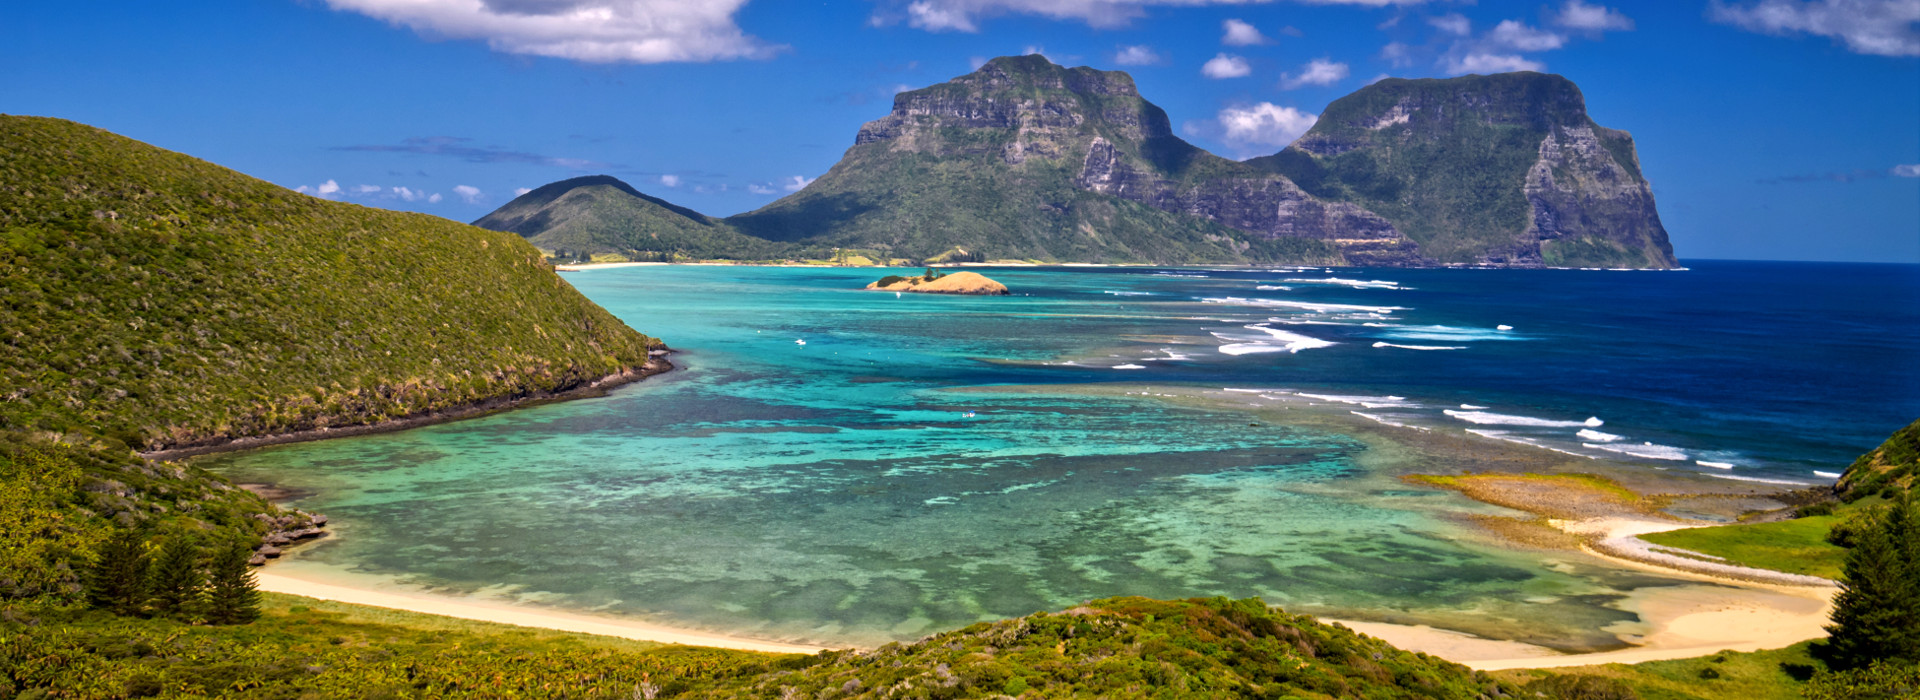 Lord Howe Island Travel Guide